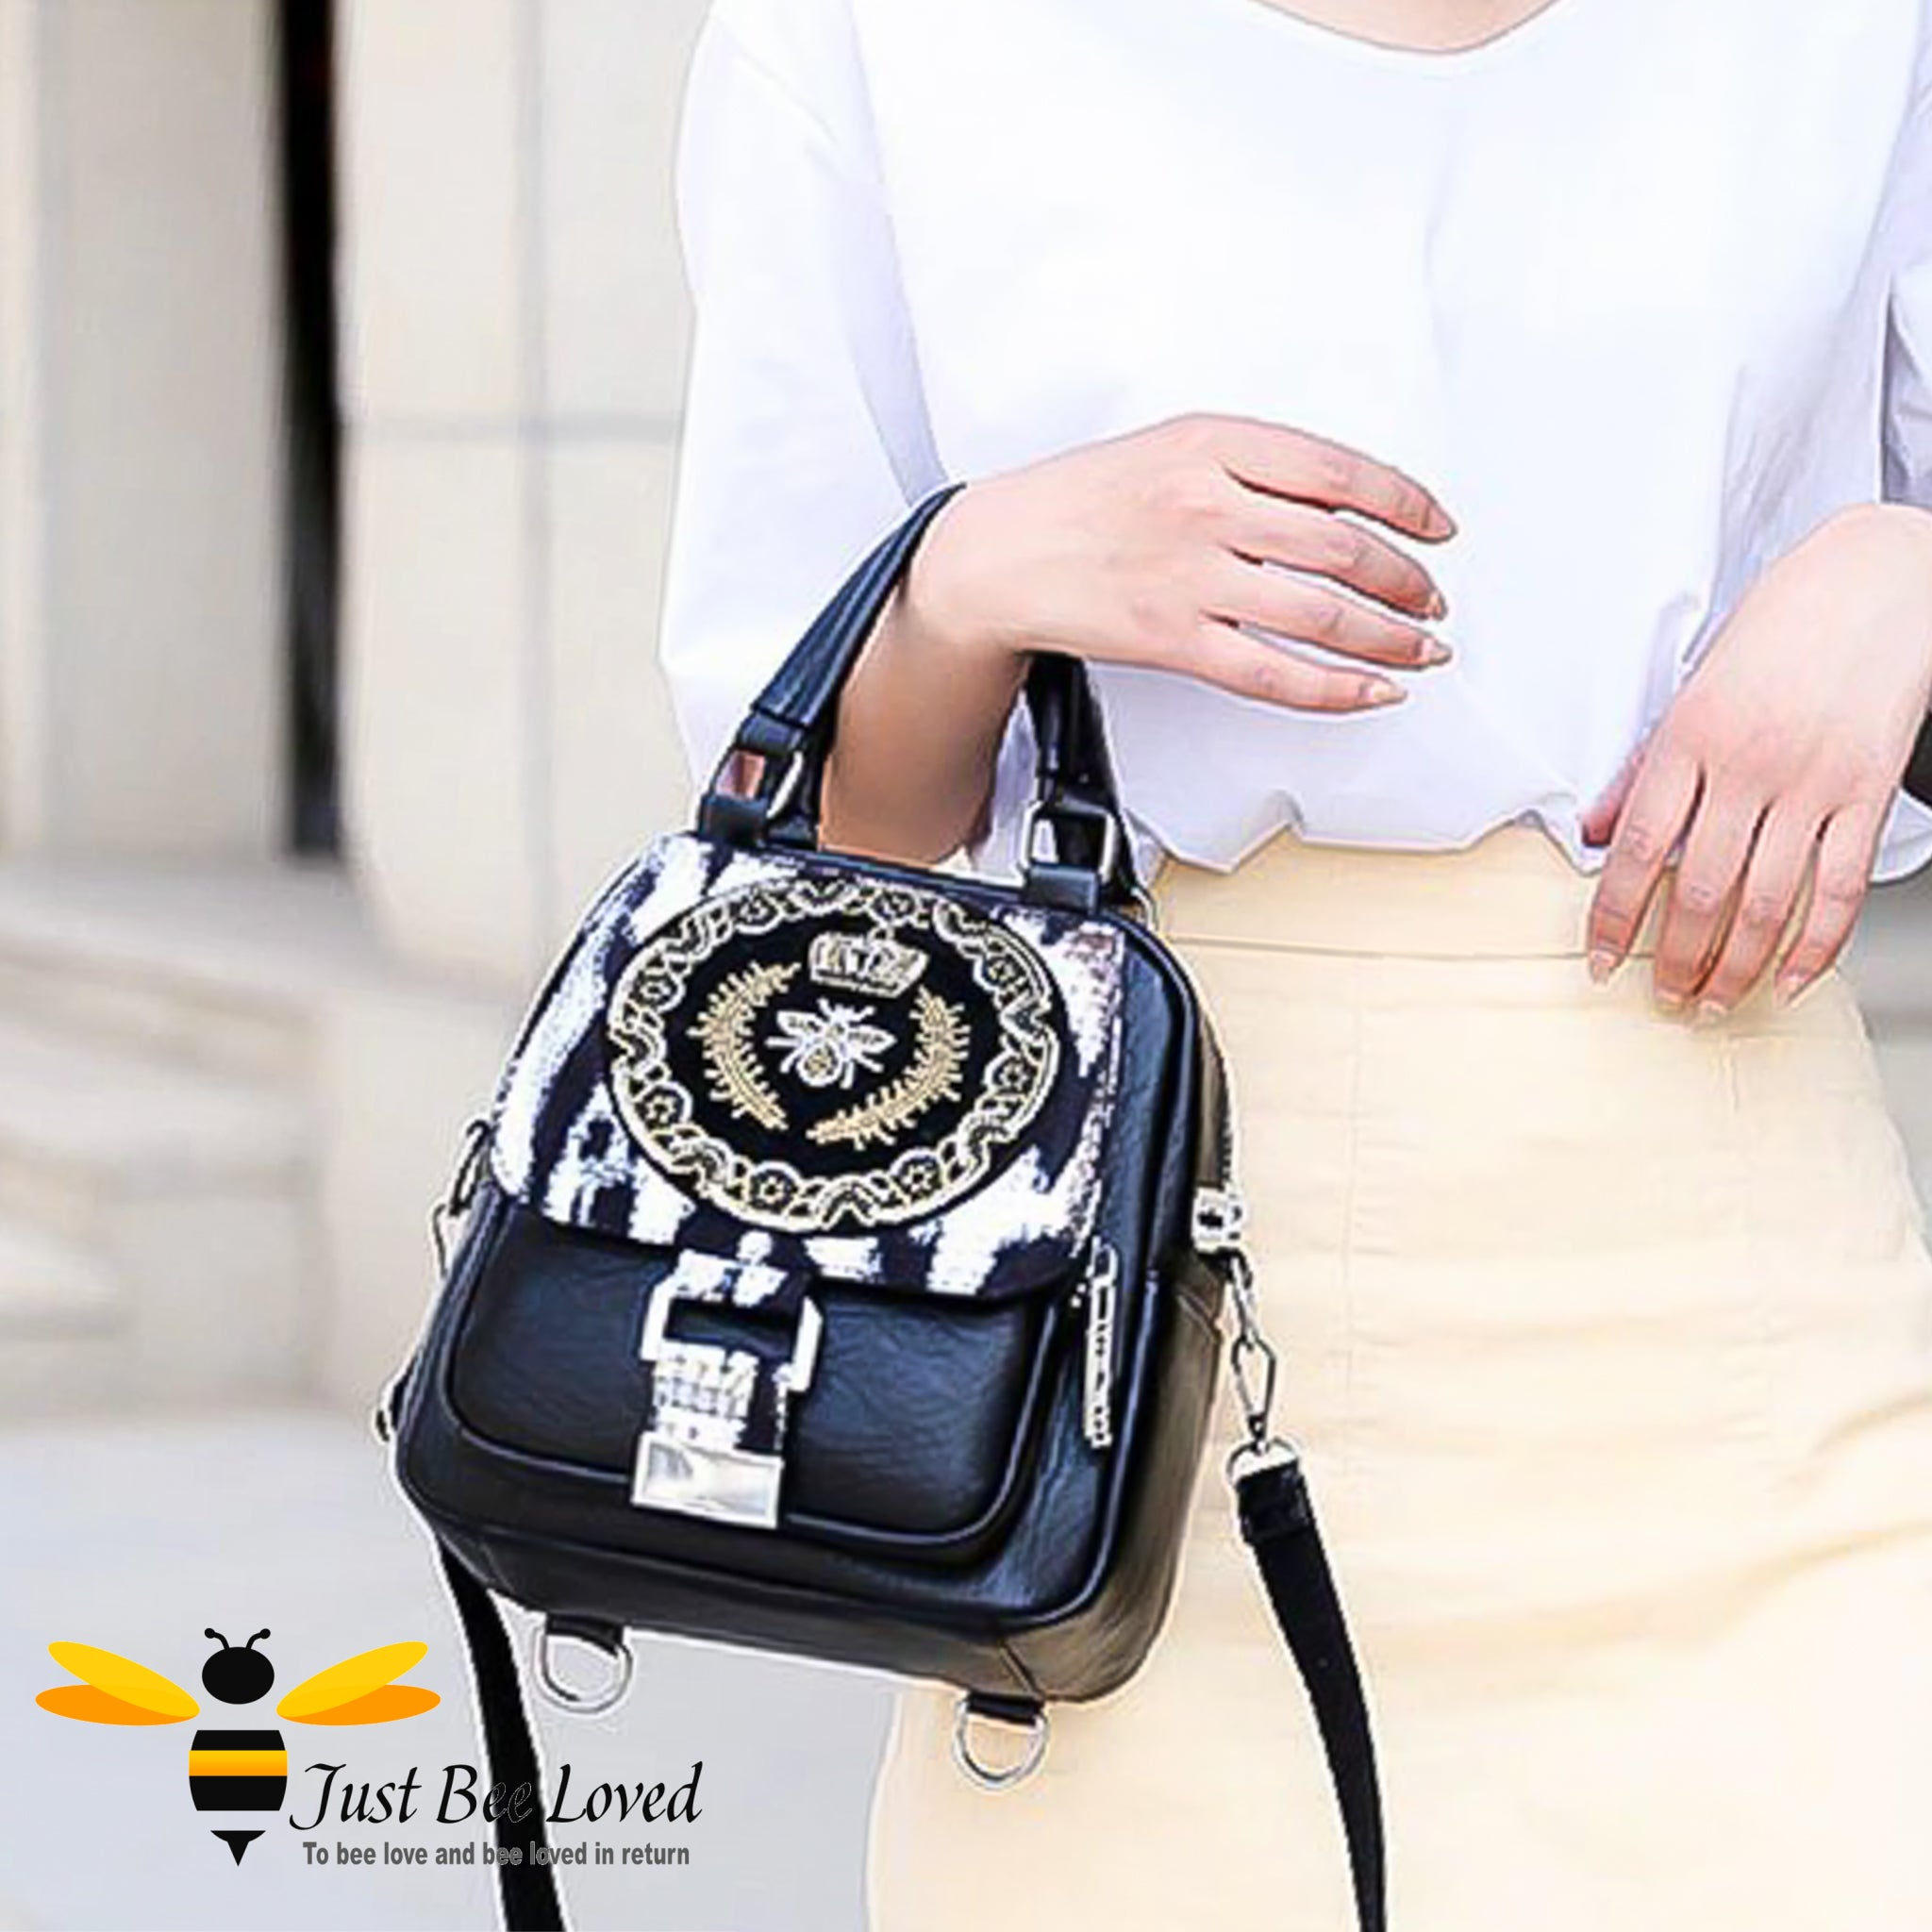 Gucci 'queen Margaret' Shoulder Bag With A Bee Motif in Black | Lyst